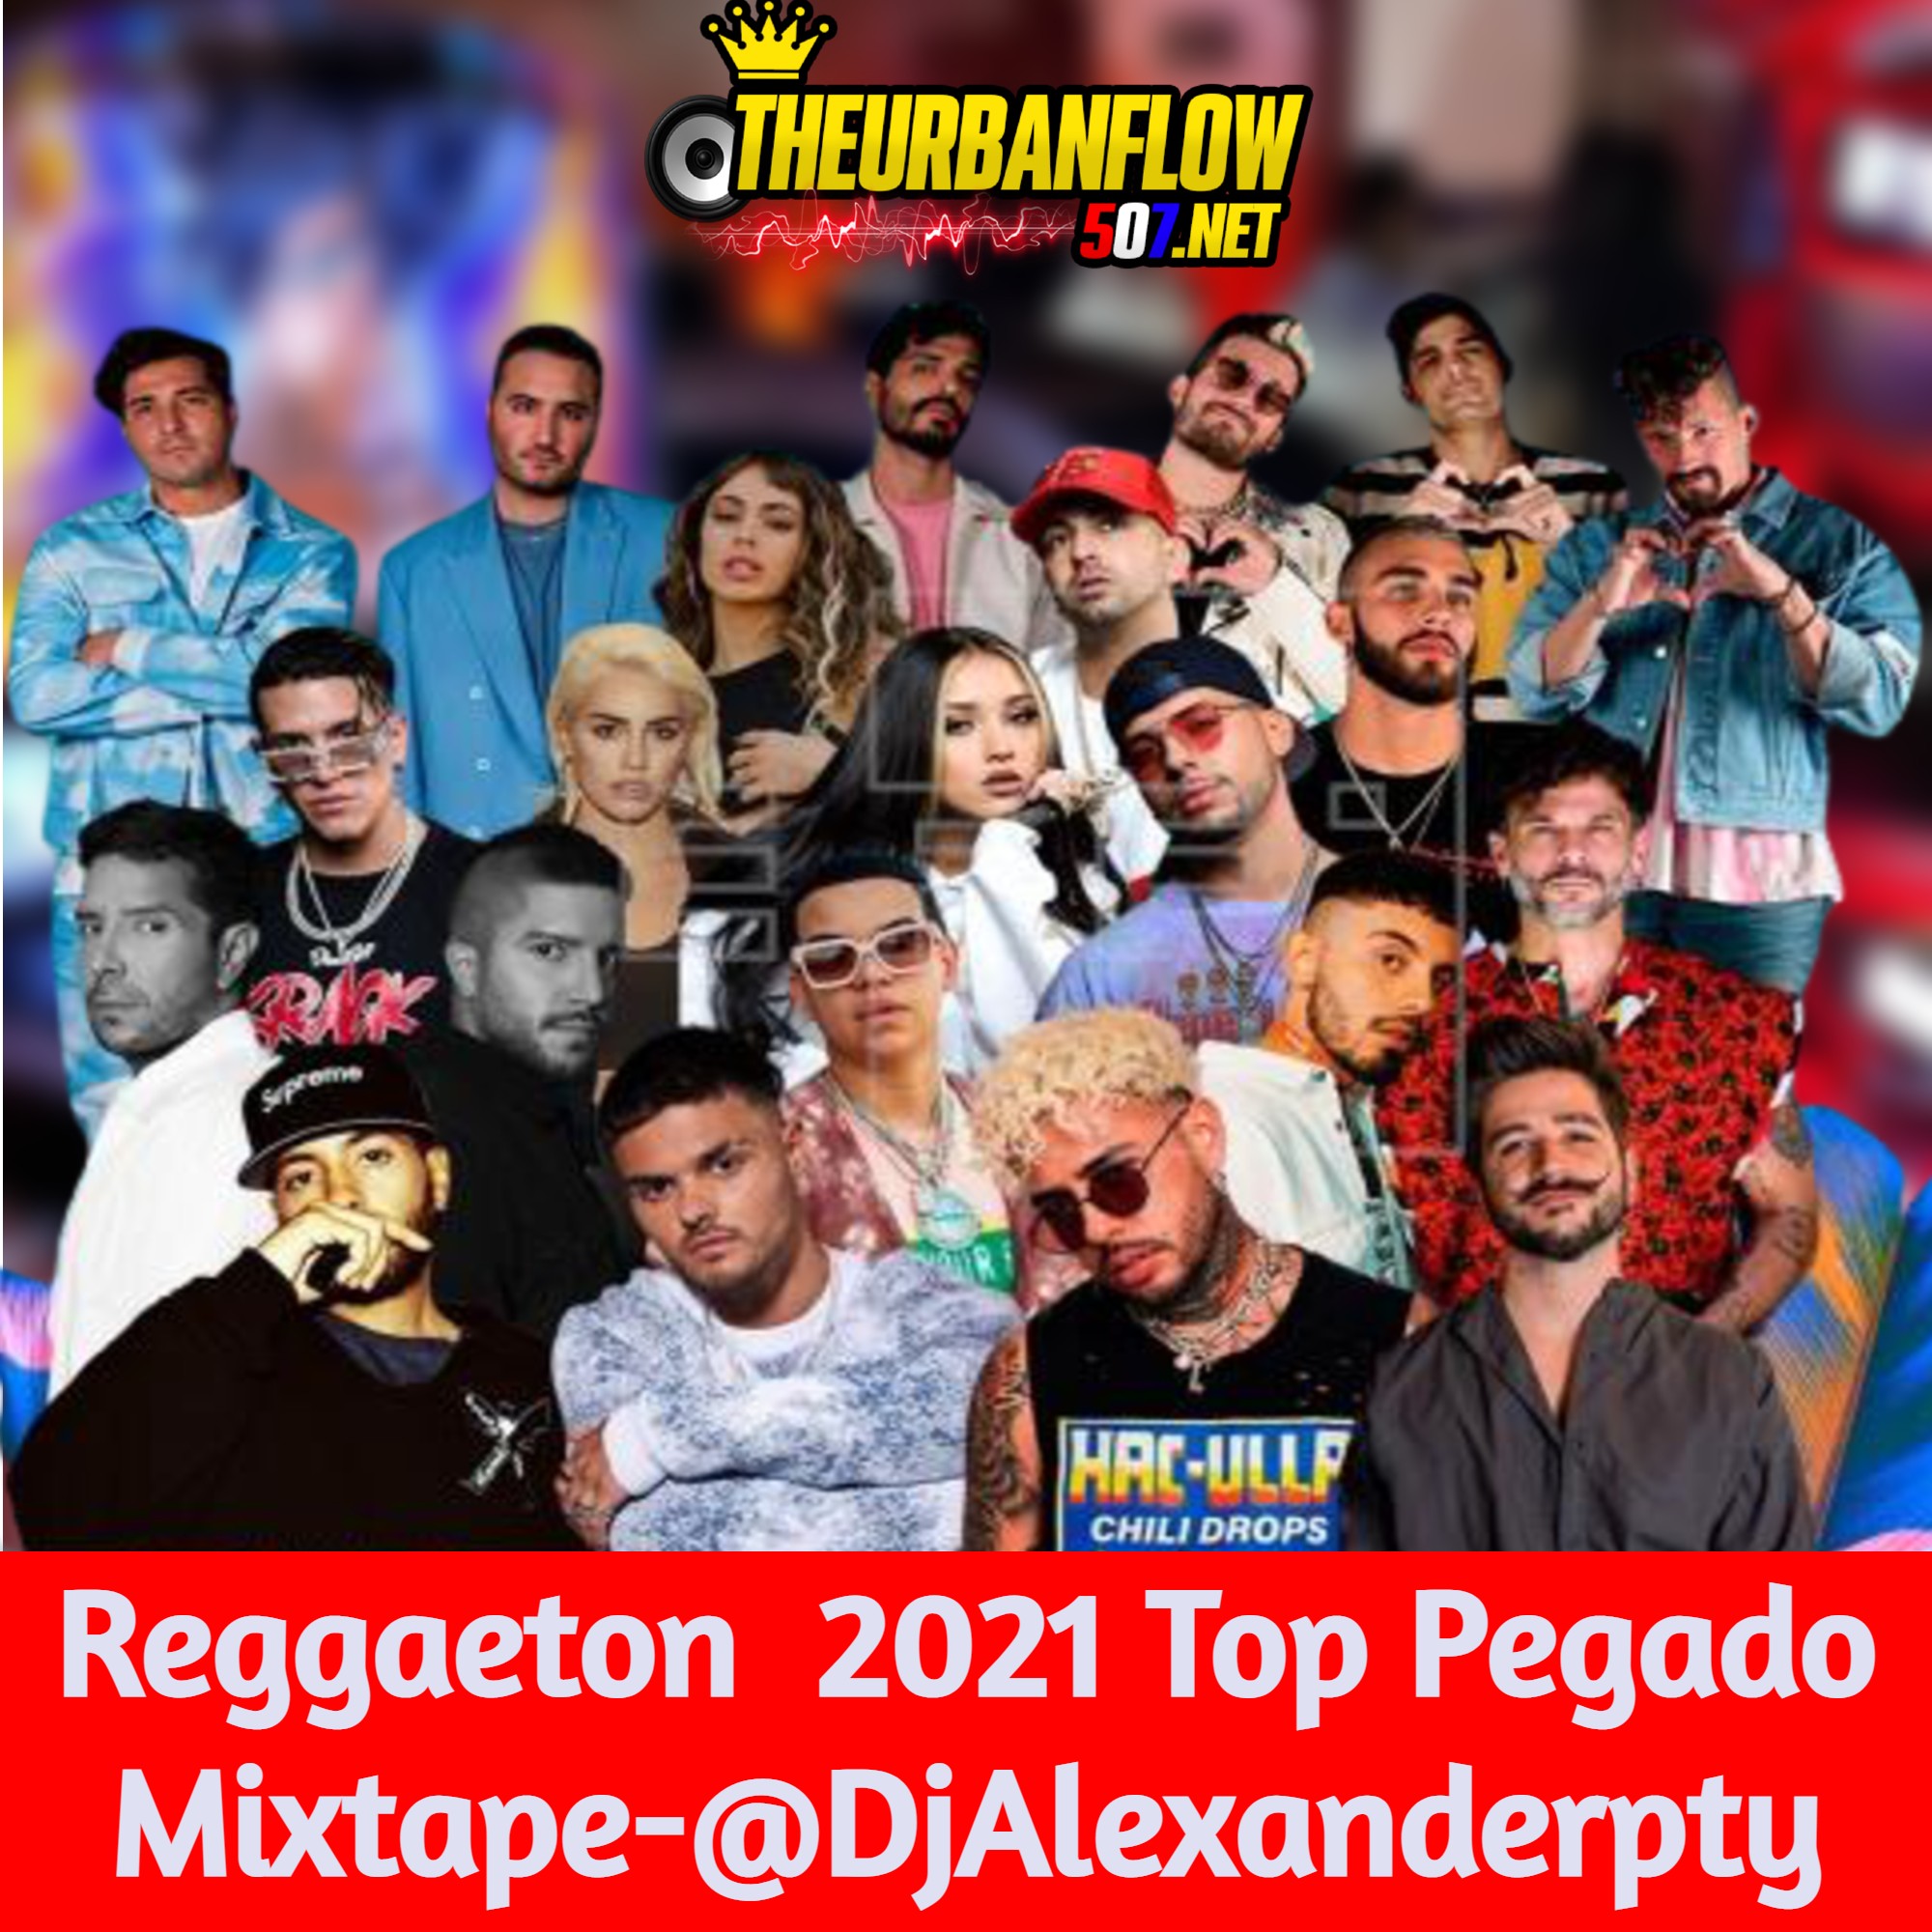 Reggaeton  2021 Top Pegado Mixtape-@DjAlexanderpty